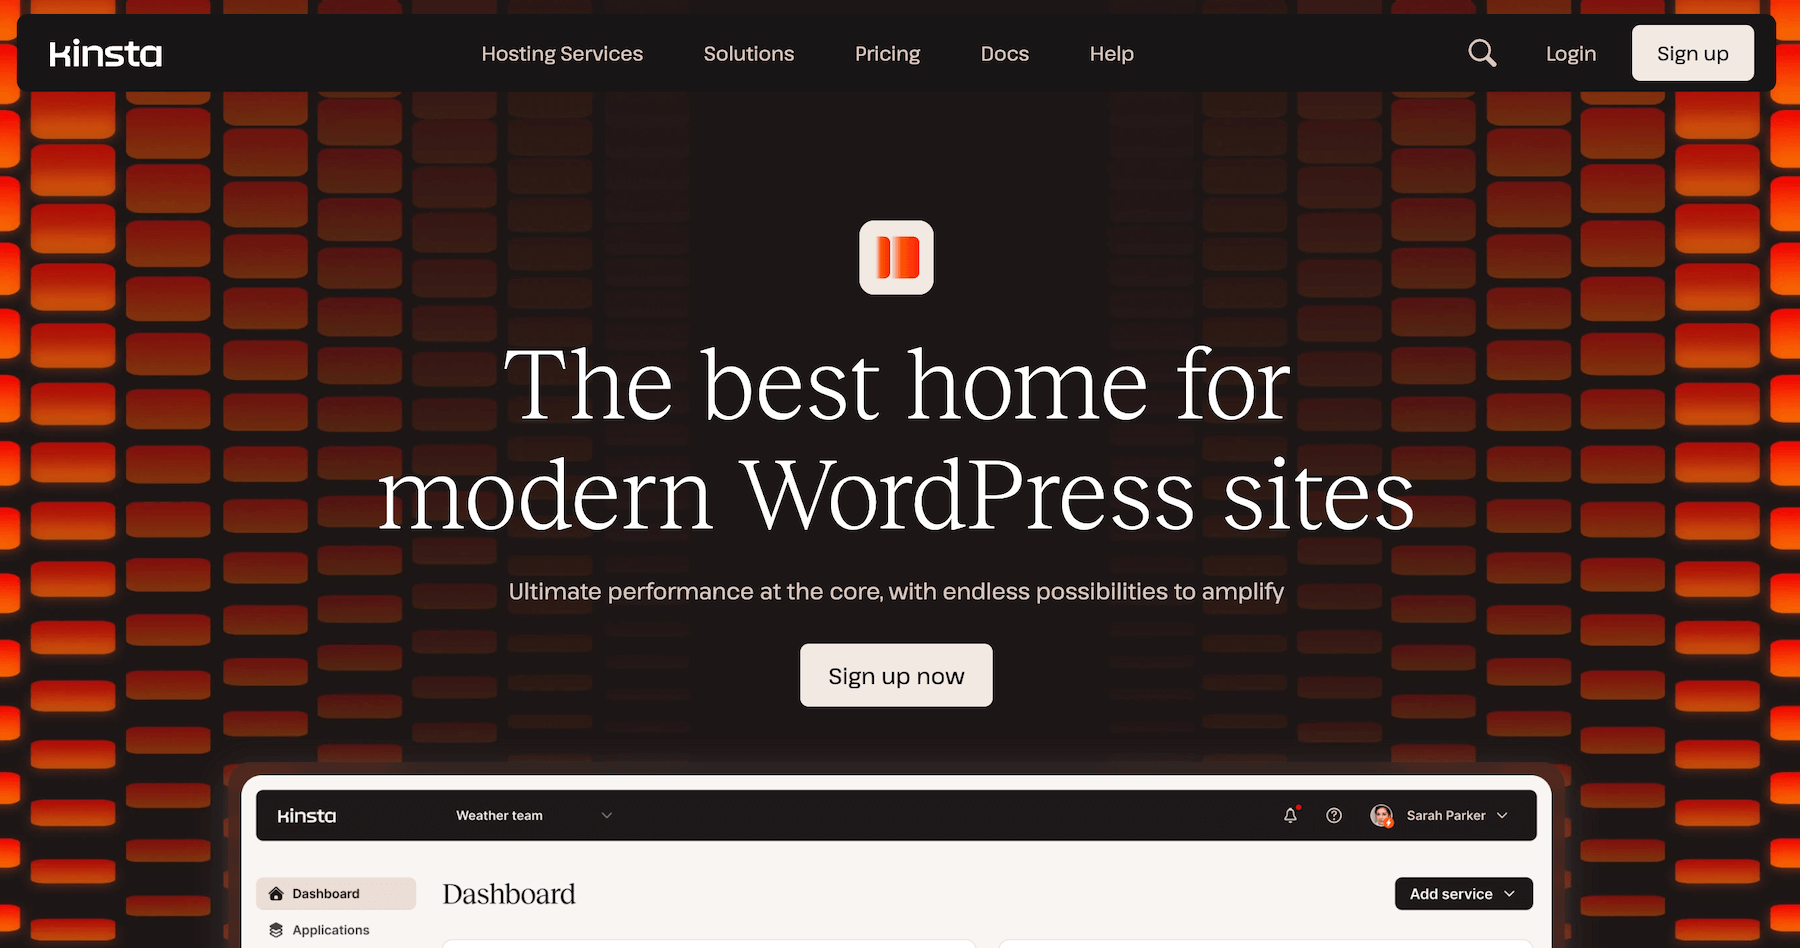 Kinsta - One of the Best Enterprise WordPress Hosting Providers